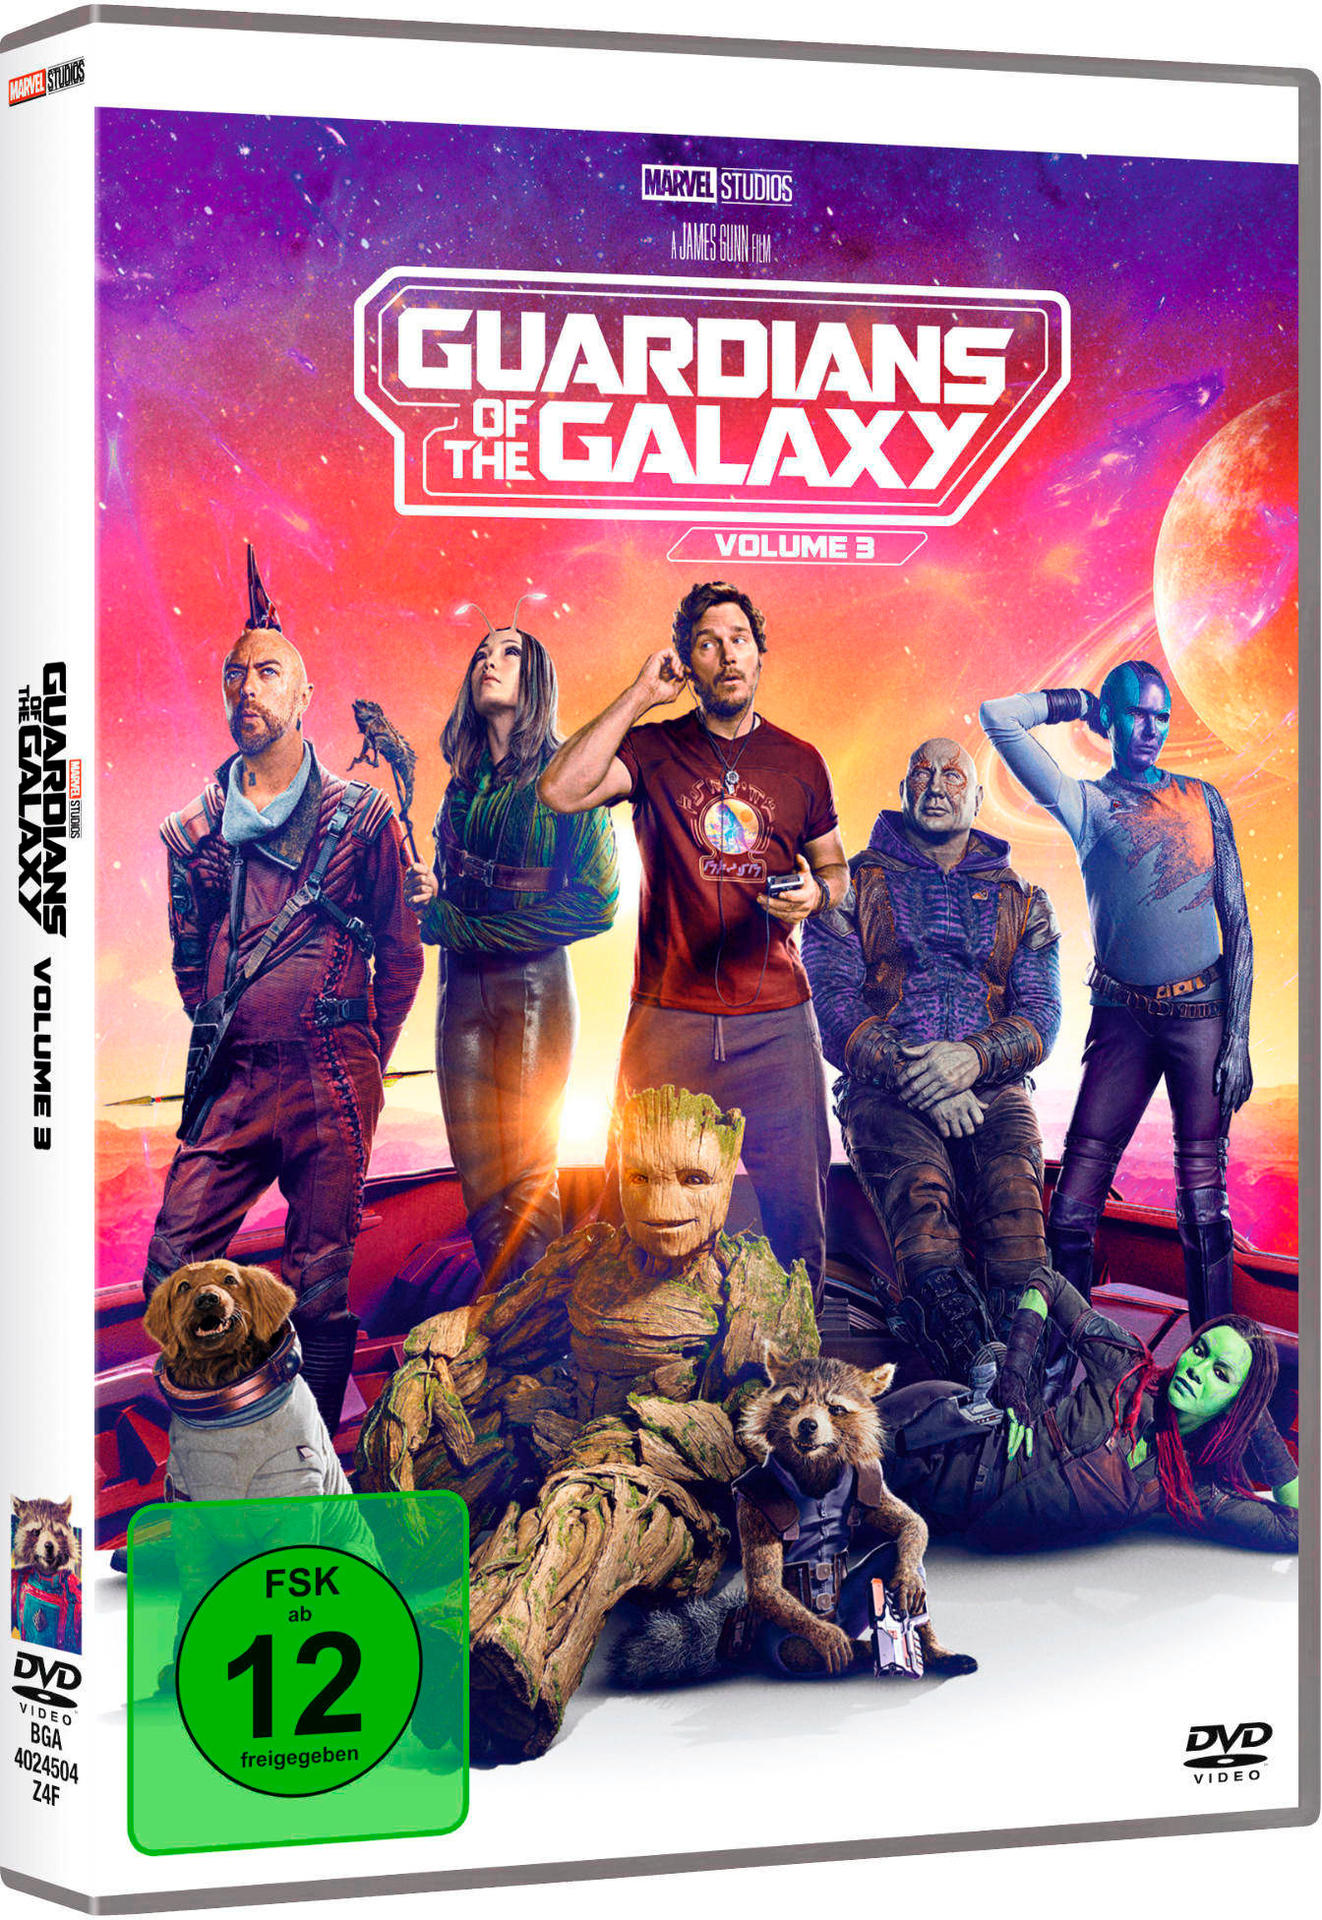 Vol. the 3 Galaxy DVD Guardians of